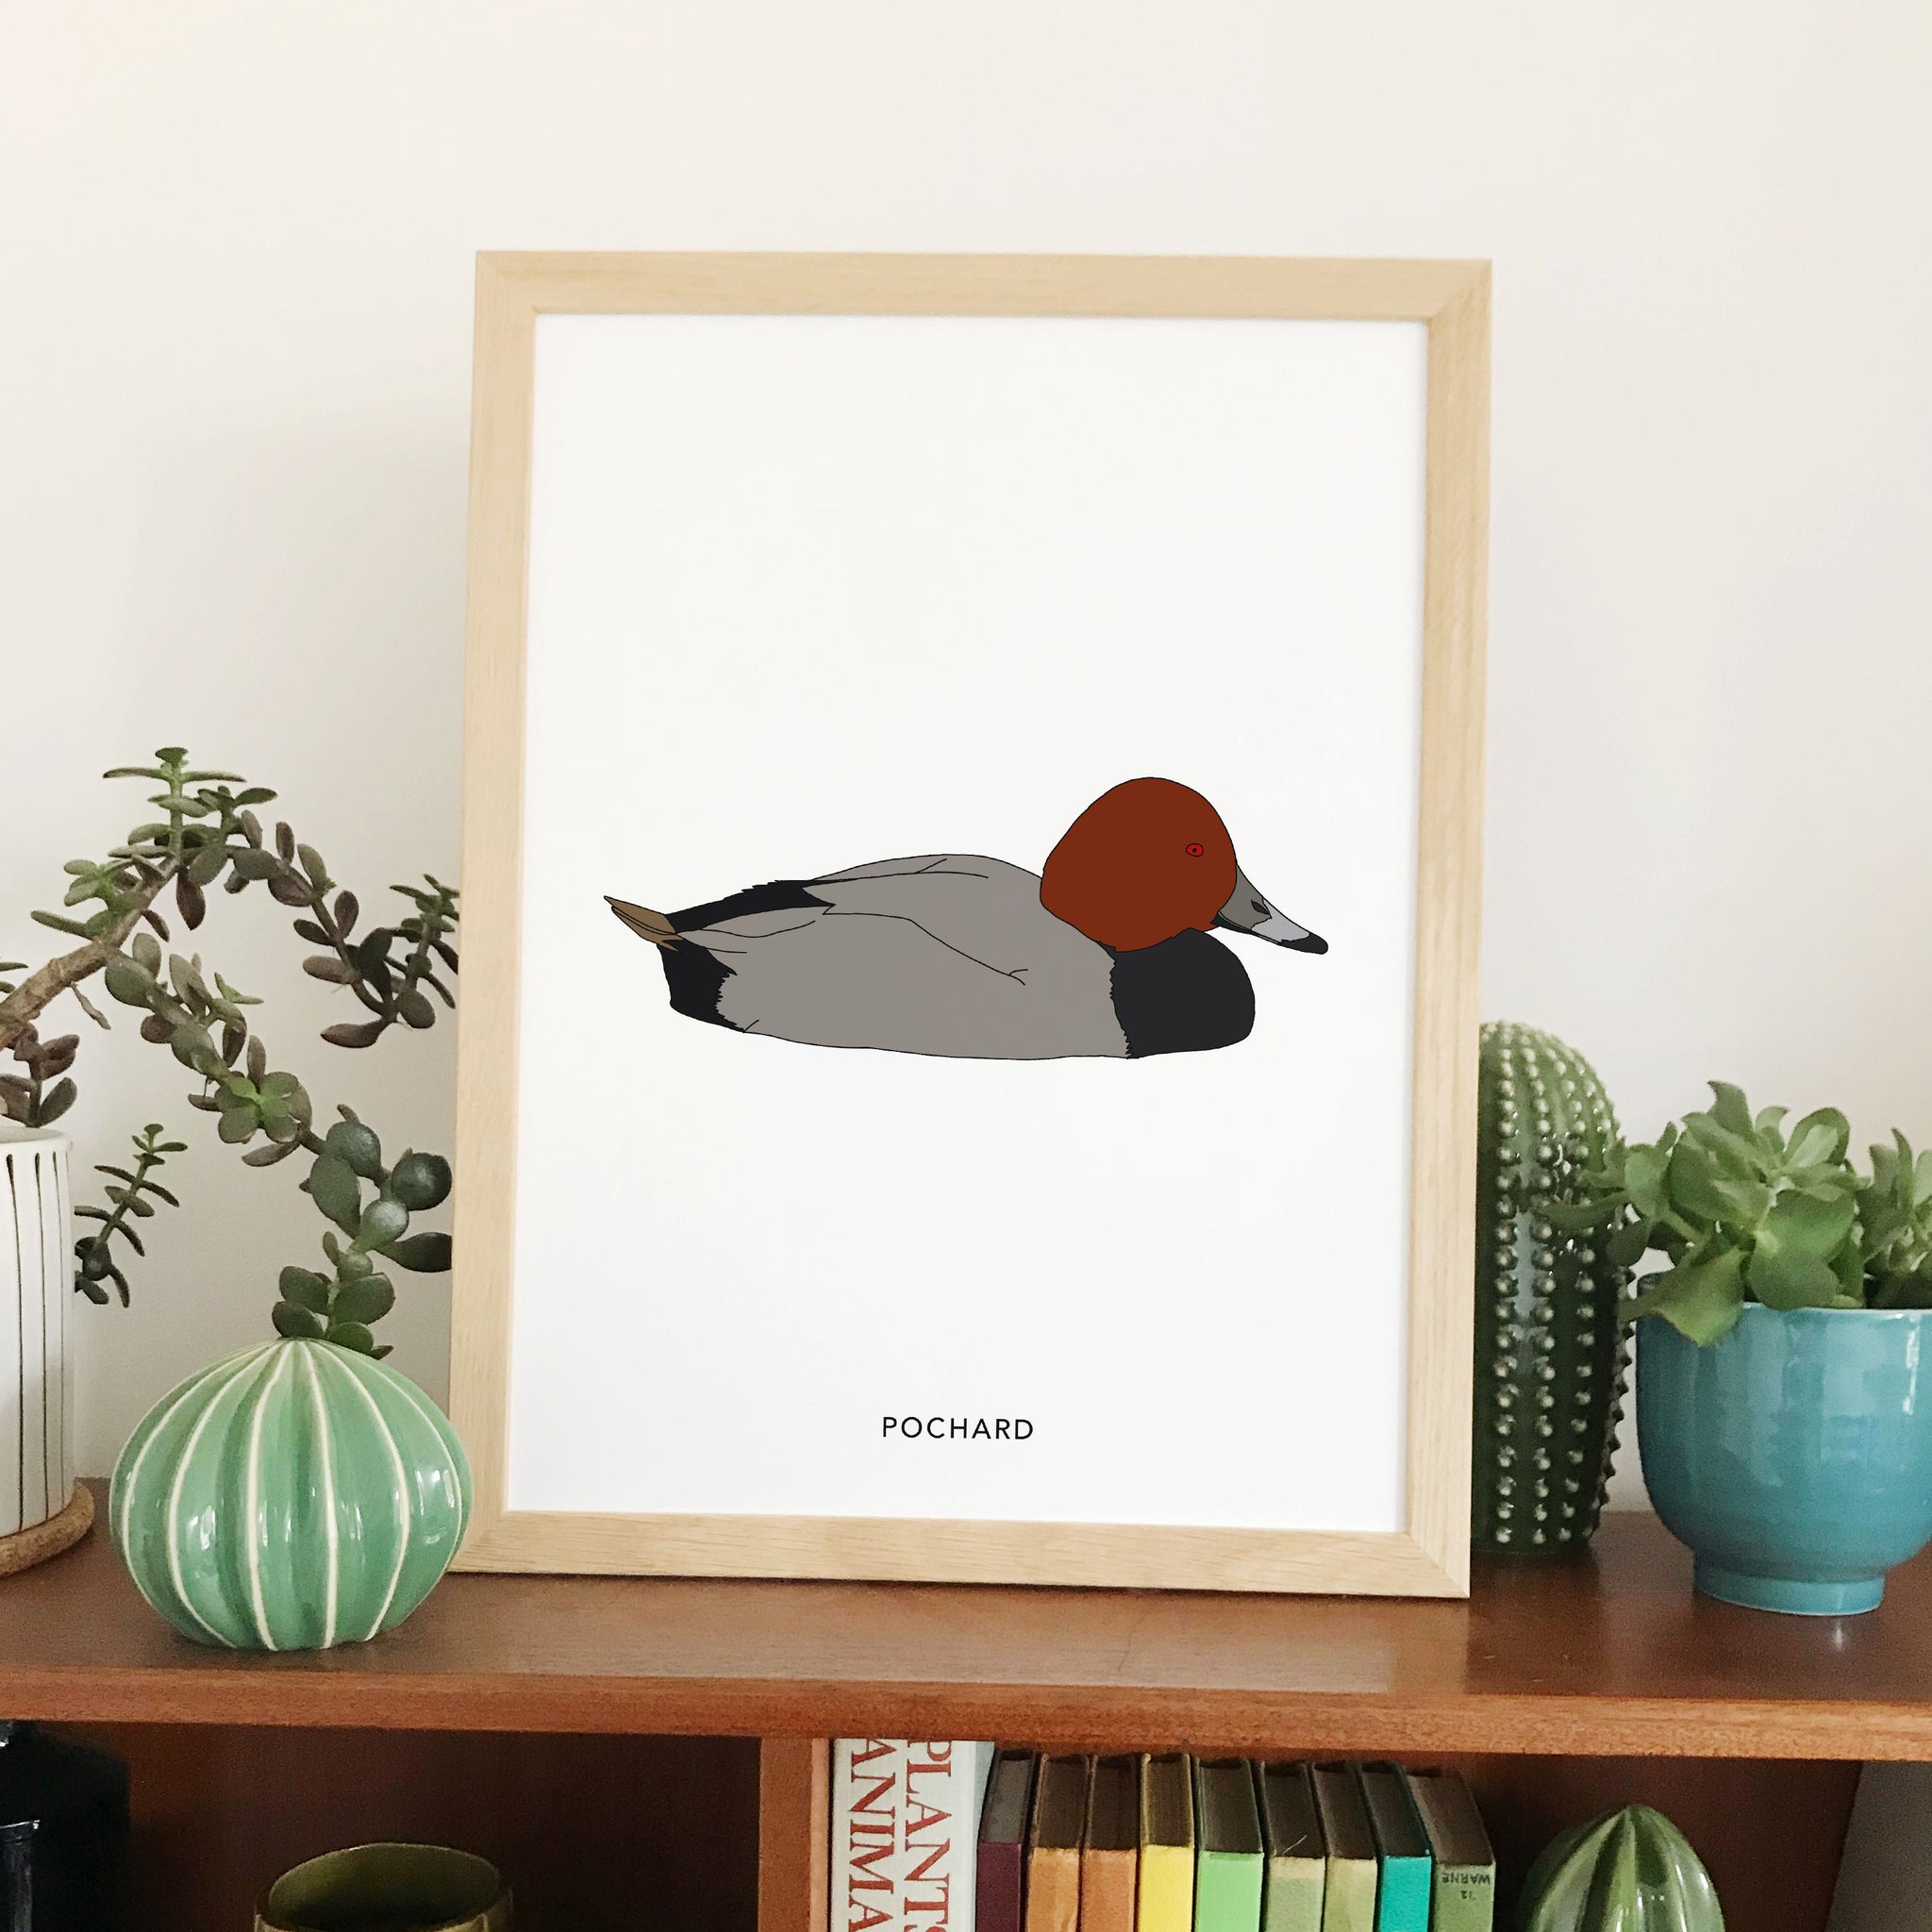 Pochard bird print